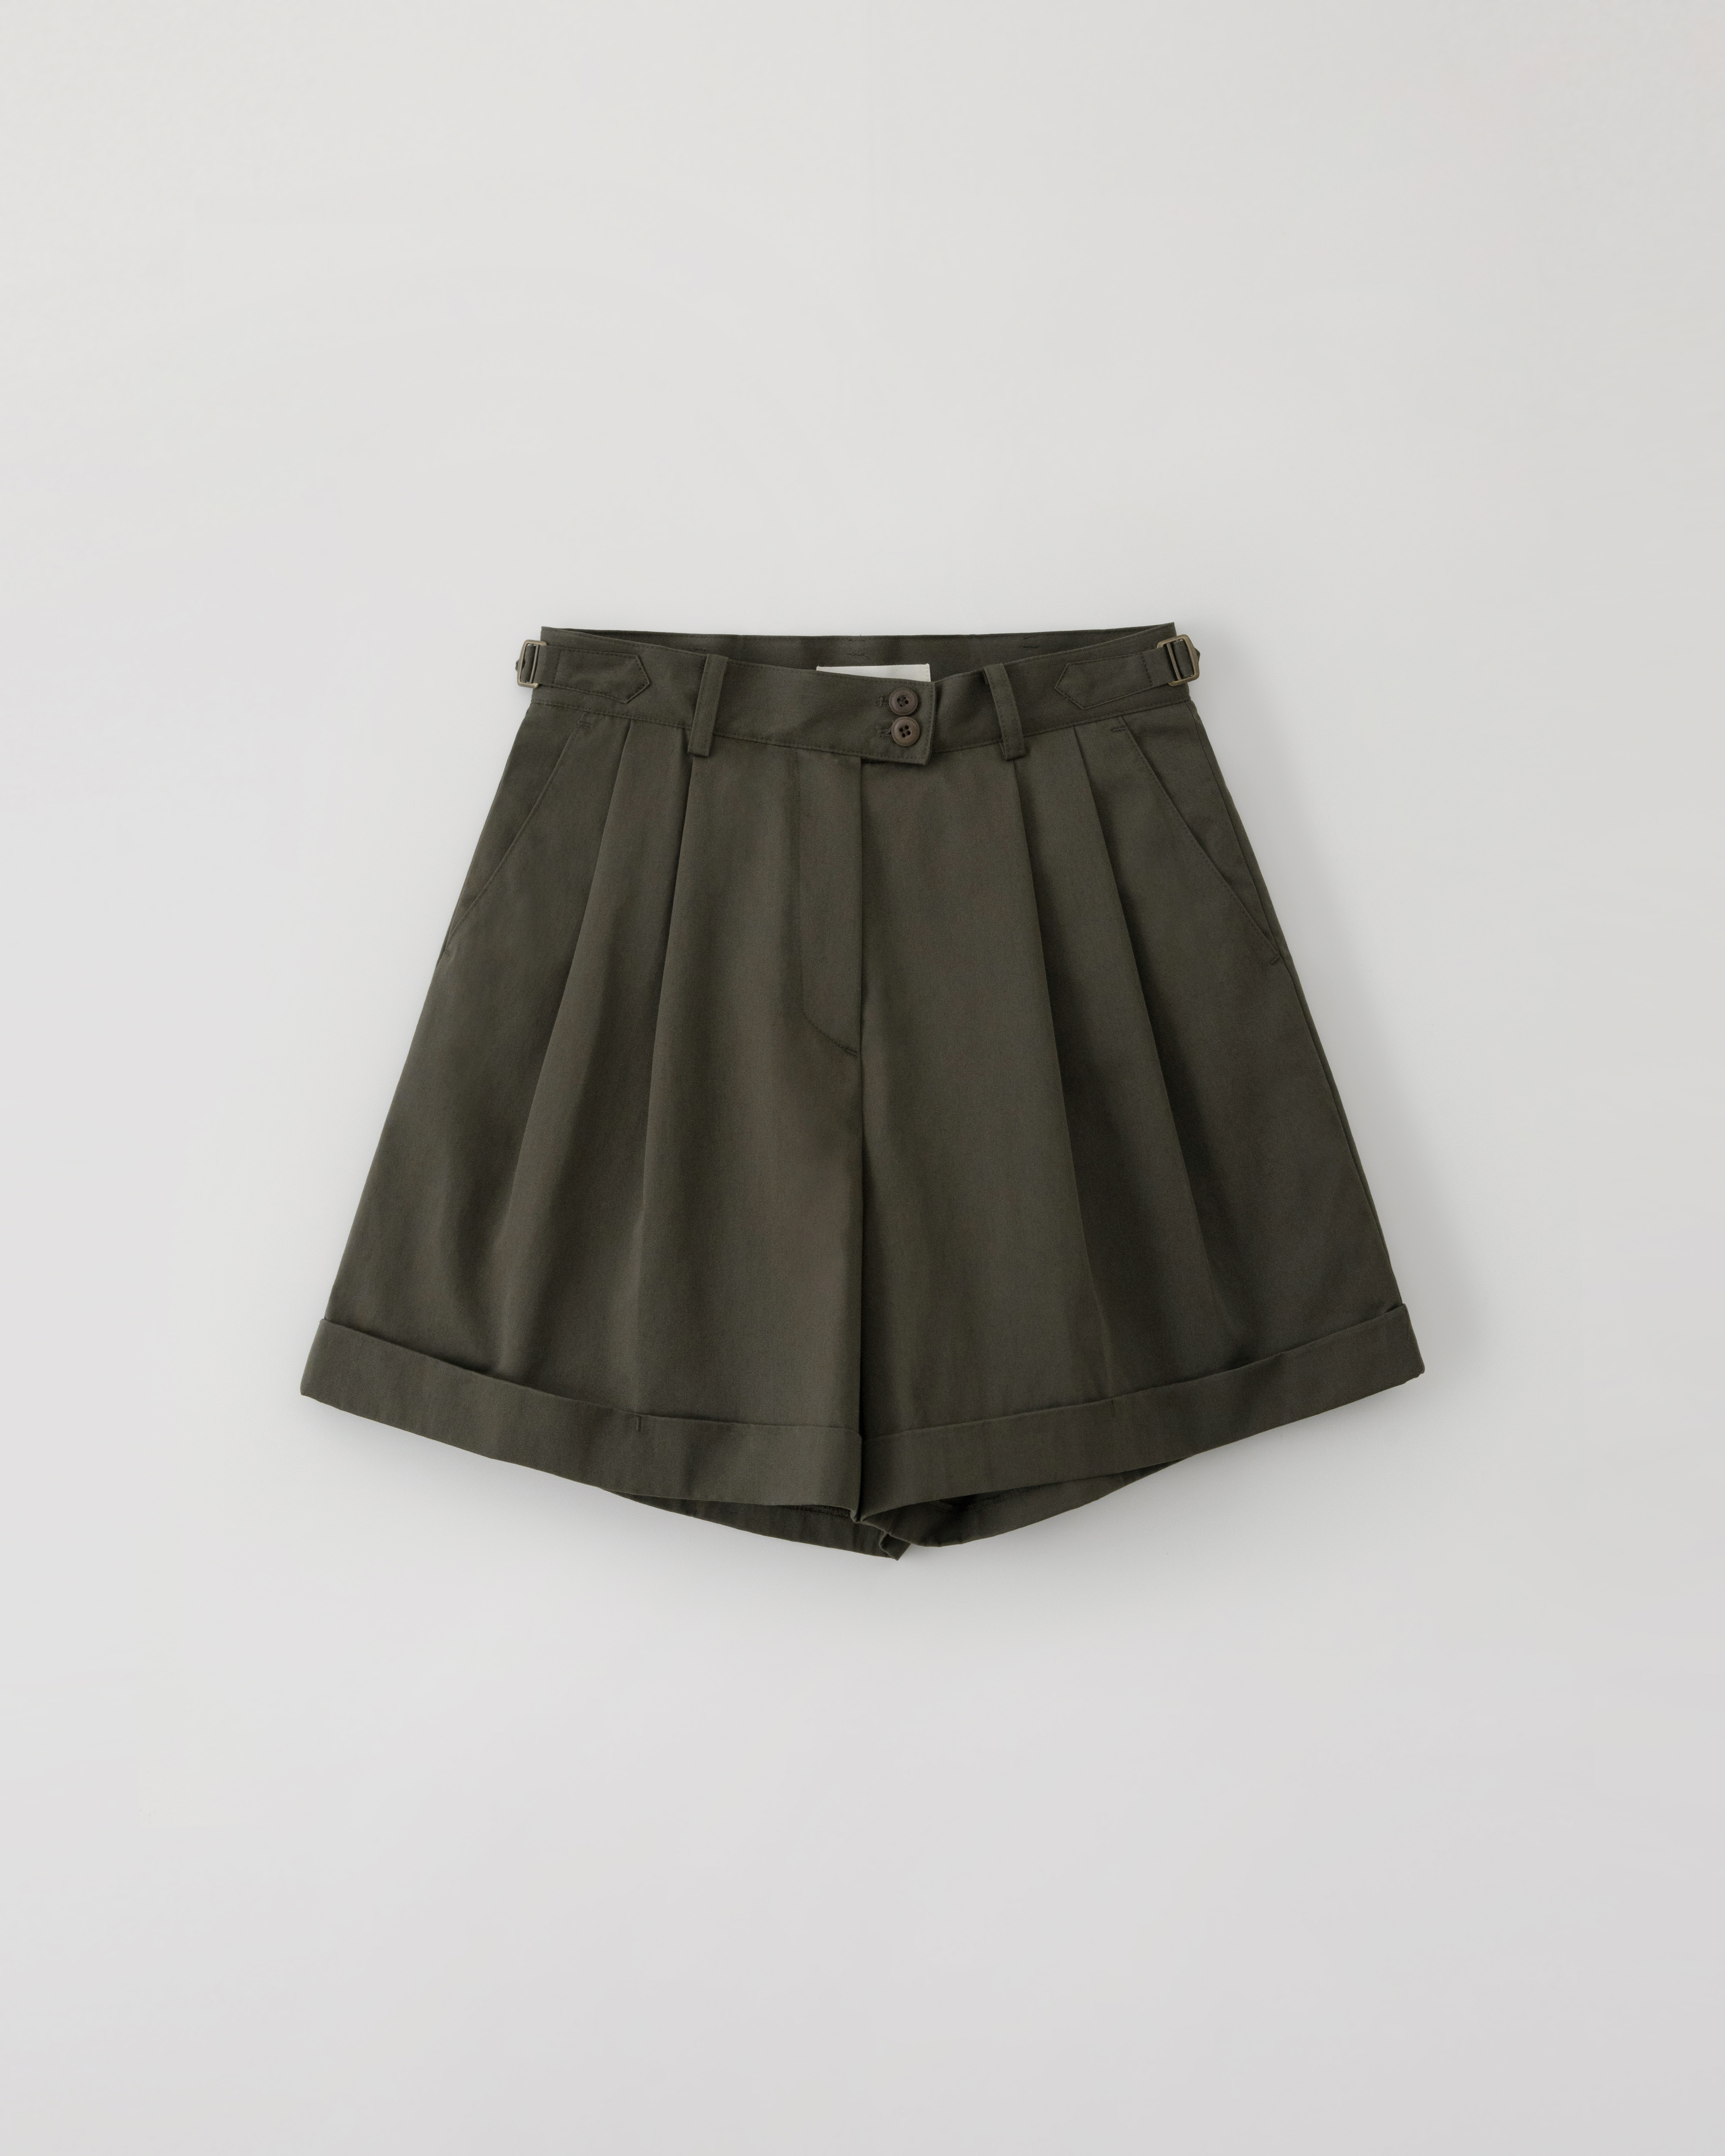 Winnona travel shorts - khaki